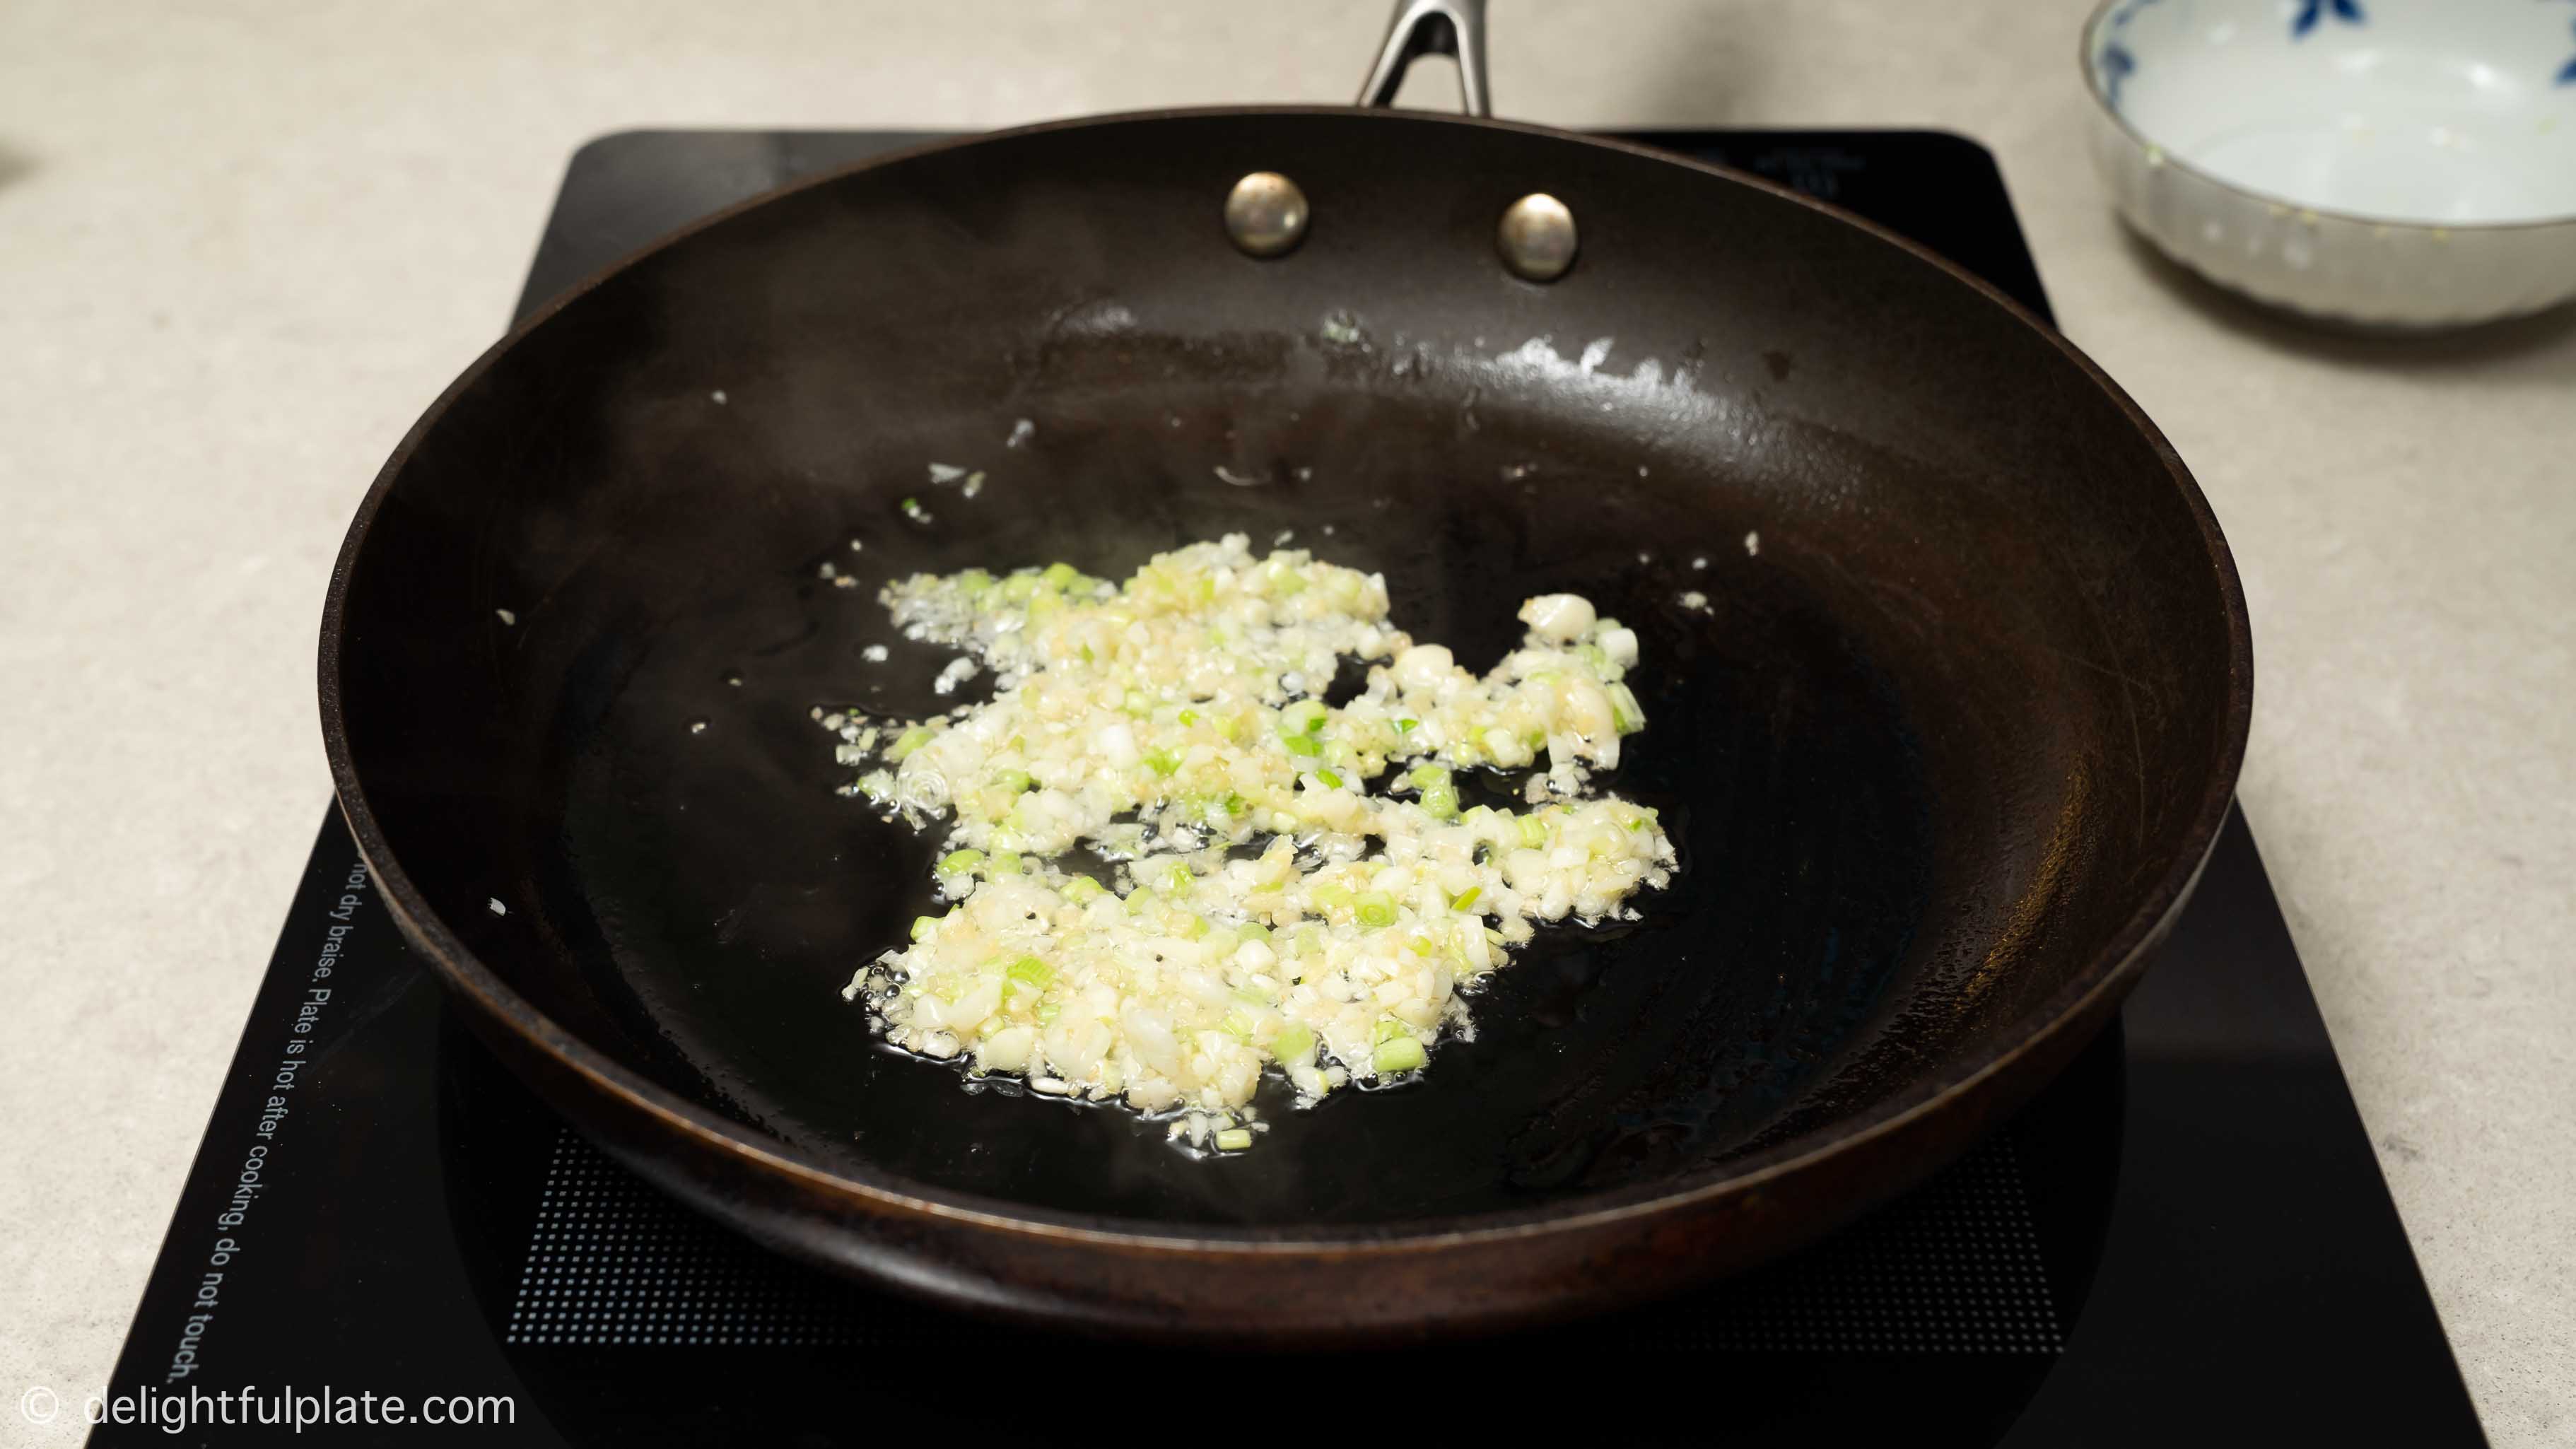 Sautéing aromatics in a pan